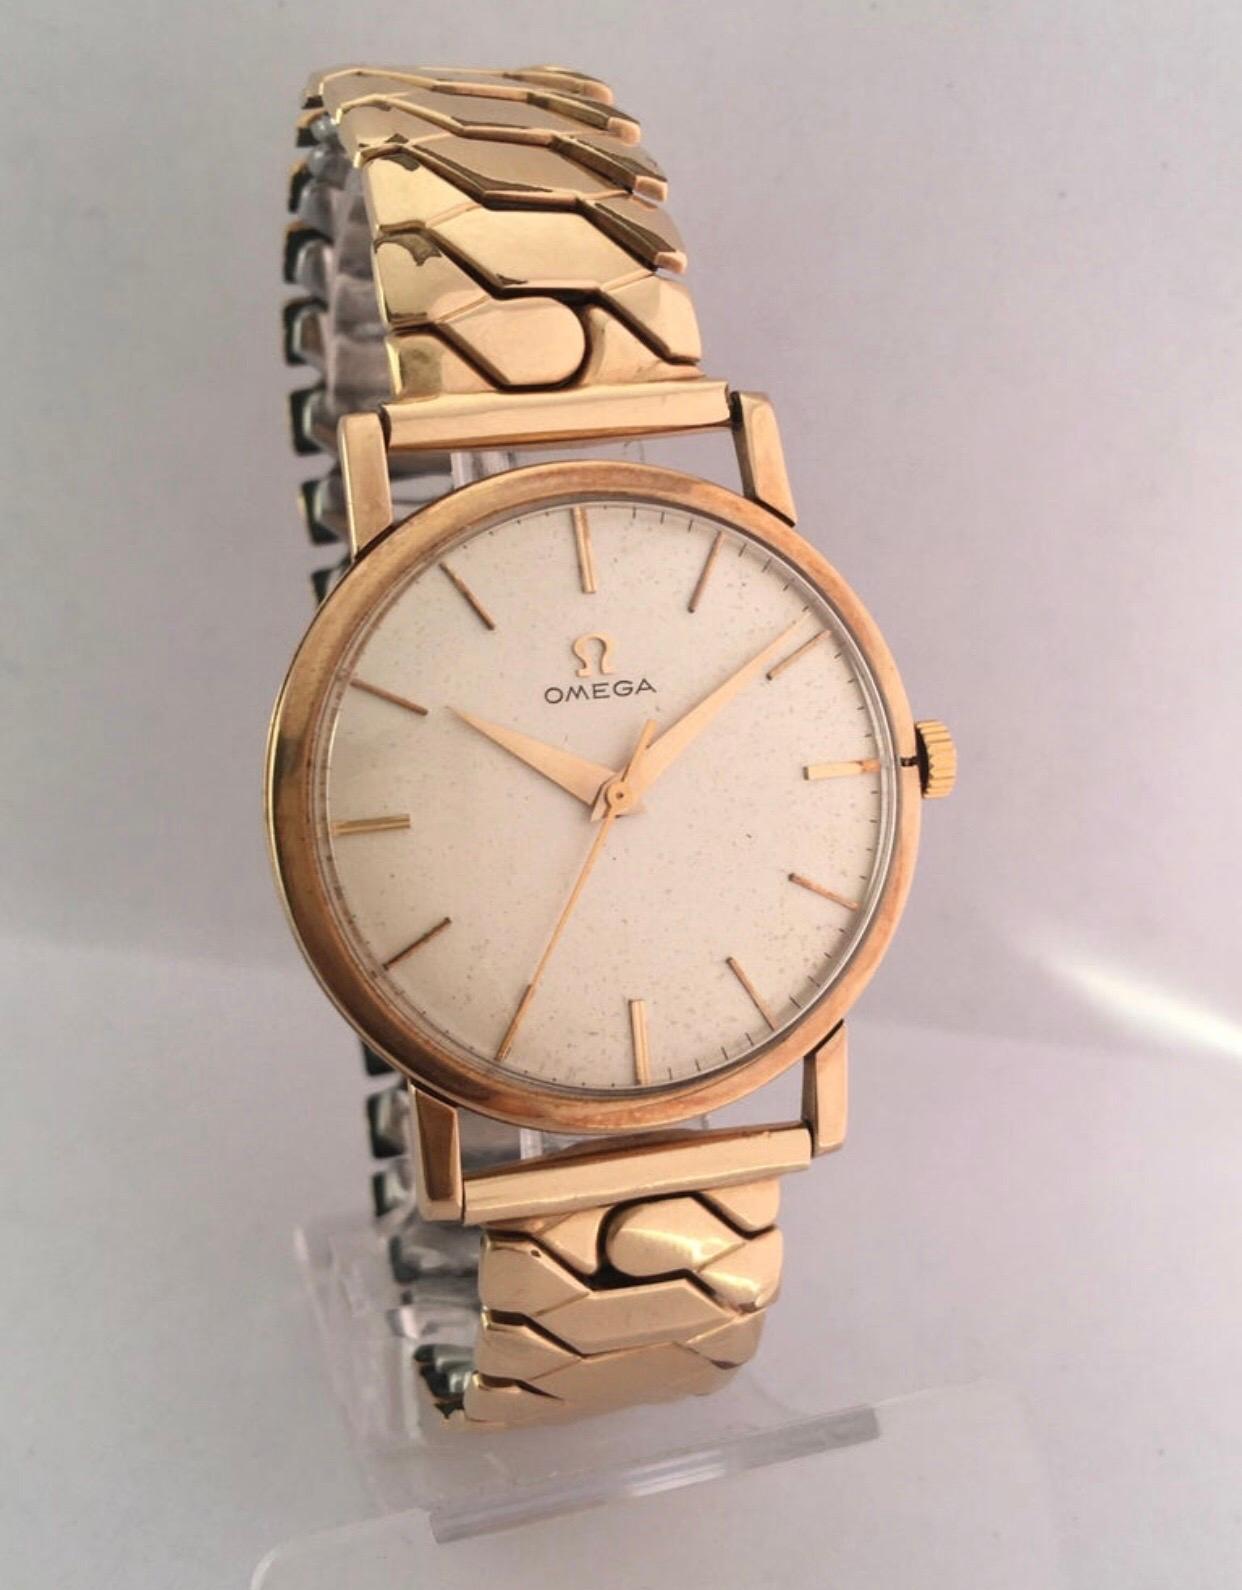 1960s gold watch